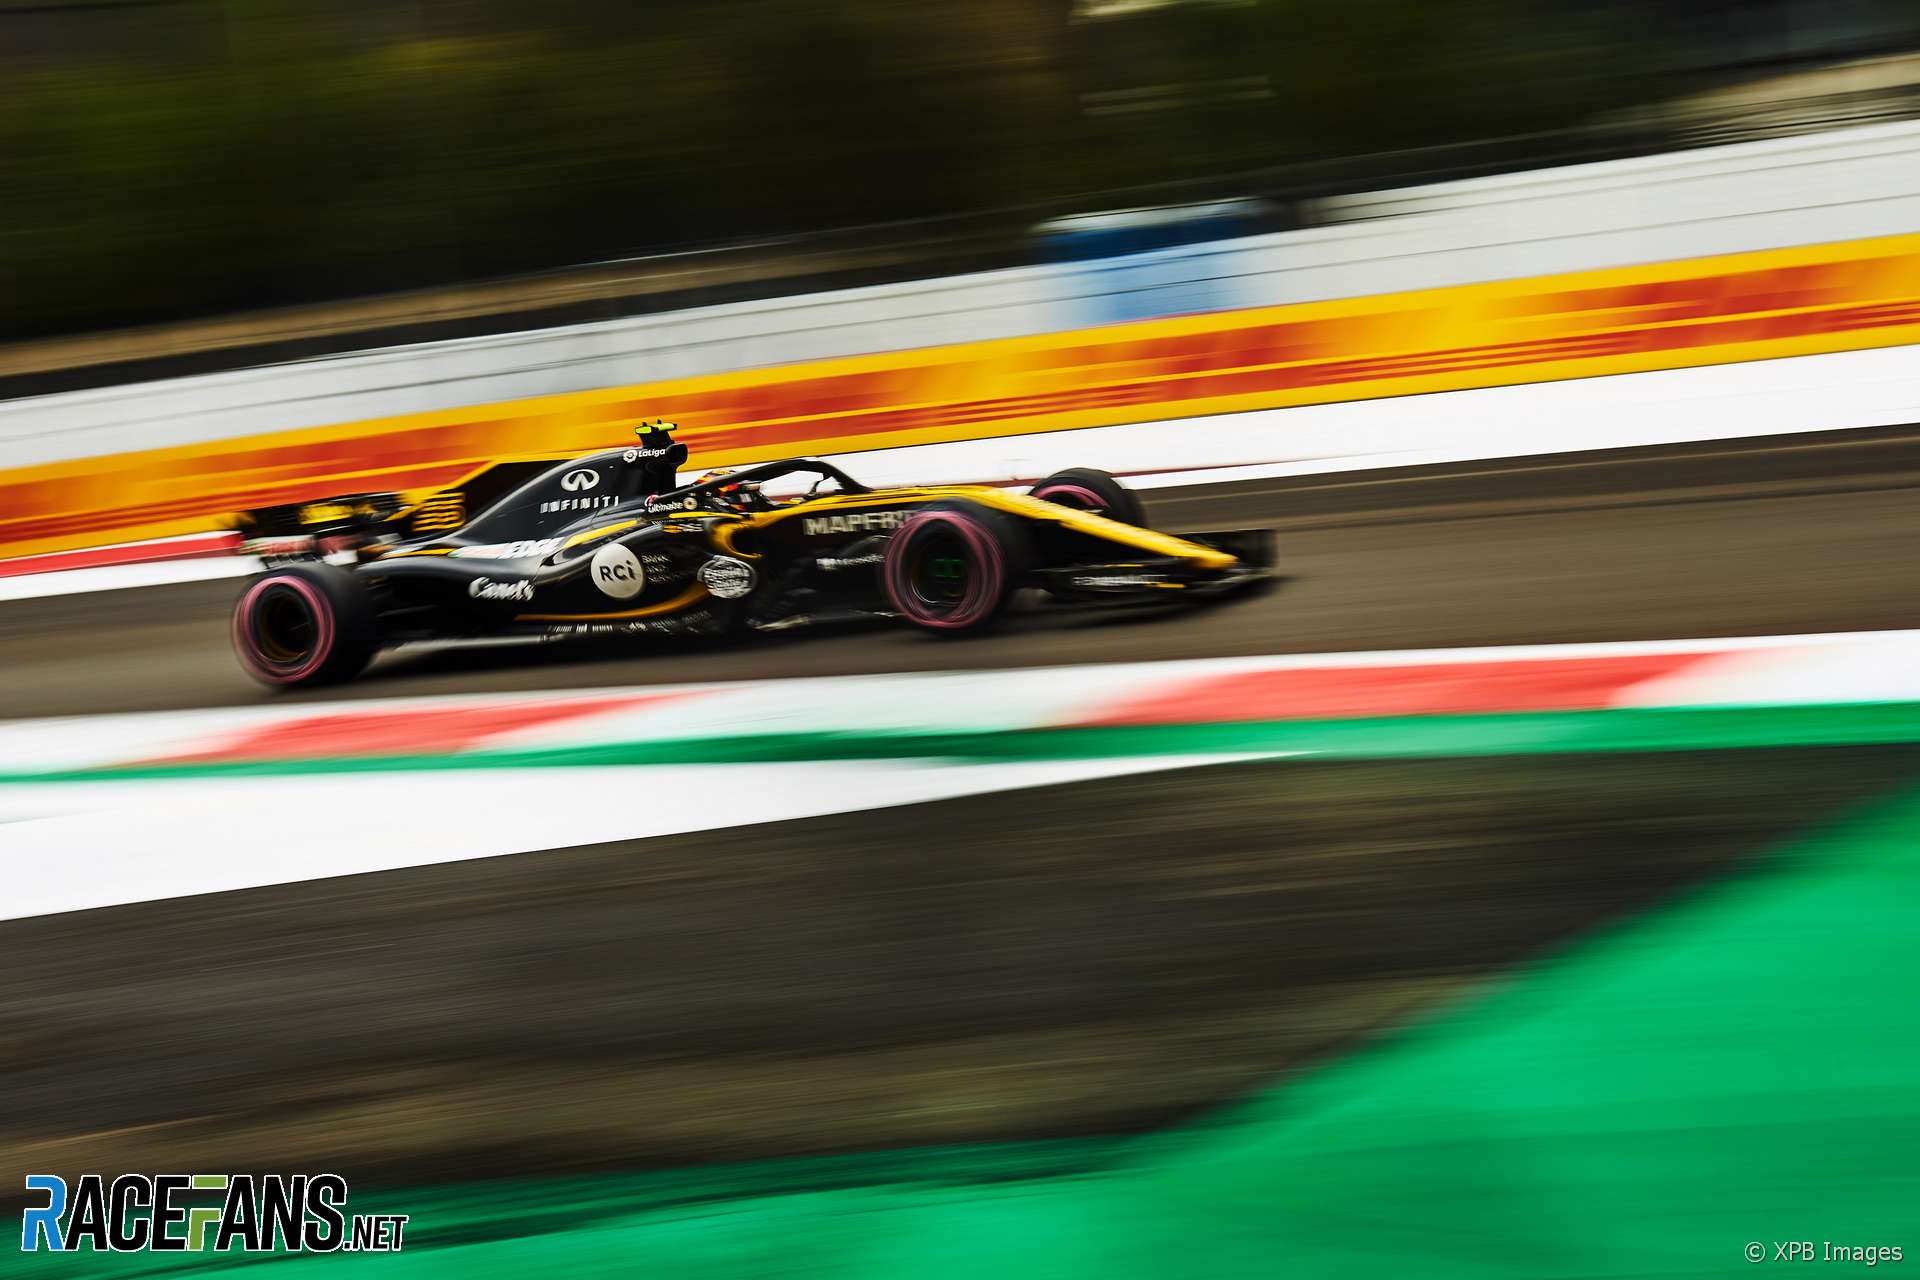 Carlos Sainz Jnr, Renault, Autodromo Hermanos Rodriguez, 2018